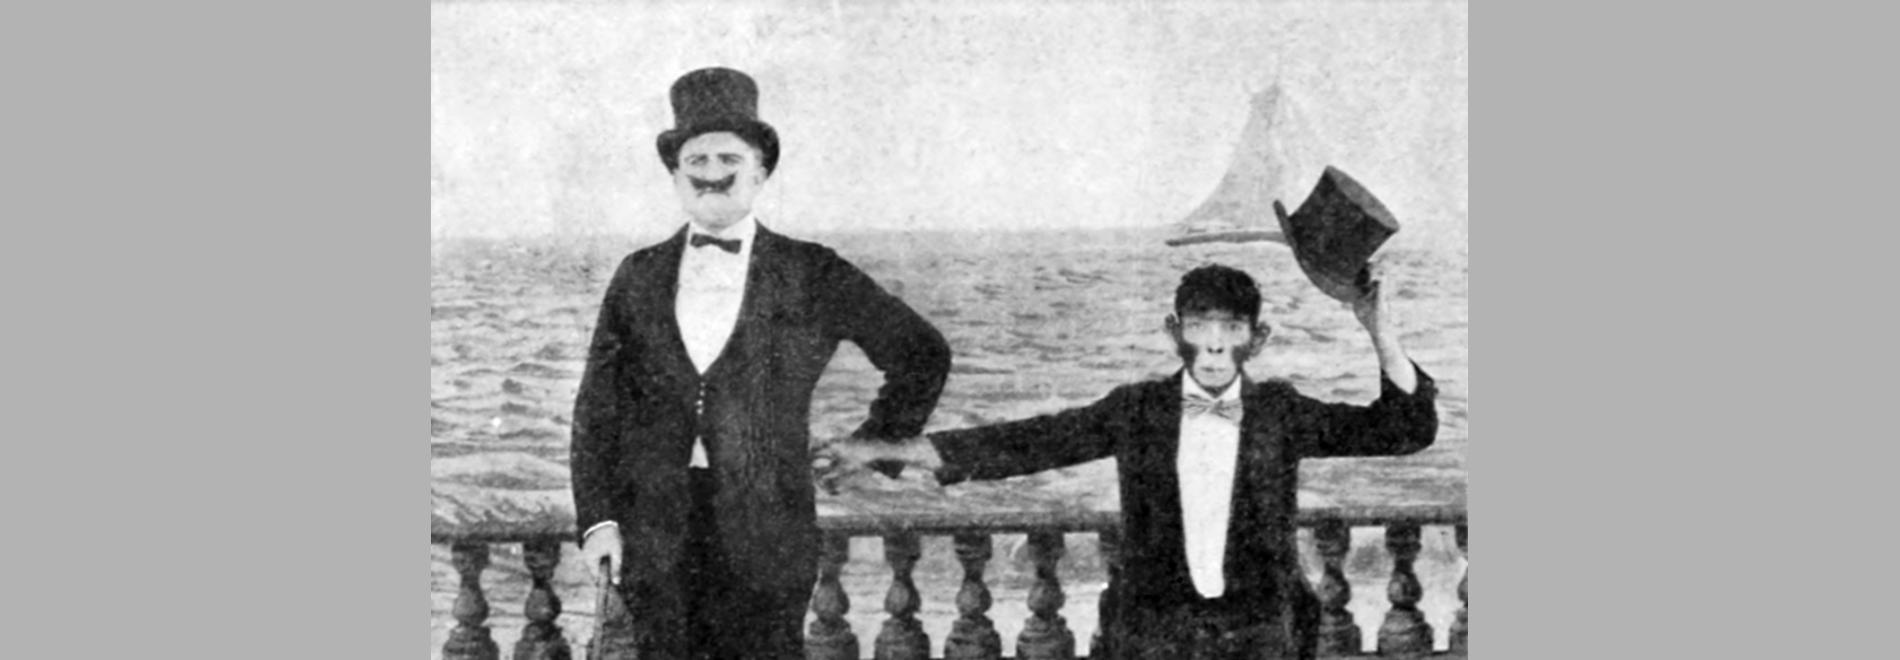 The Playhouse / El gran espectáculo (Edward F. Cline, Buster Keaton, 1922)